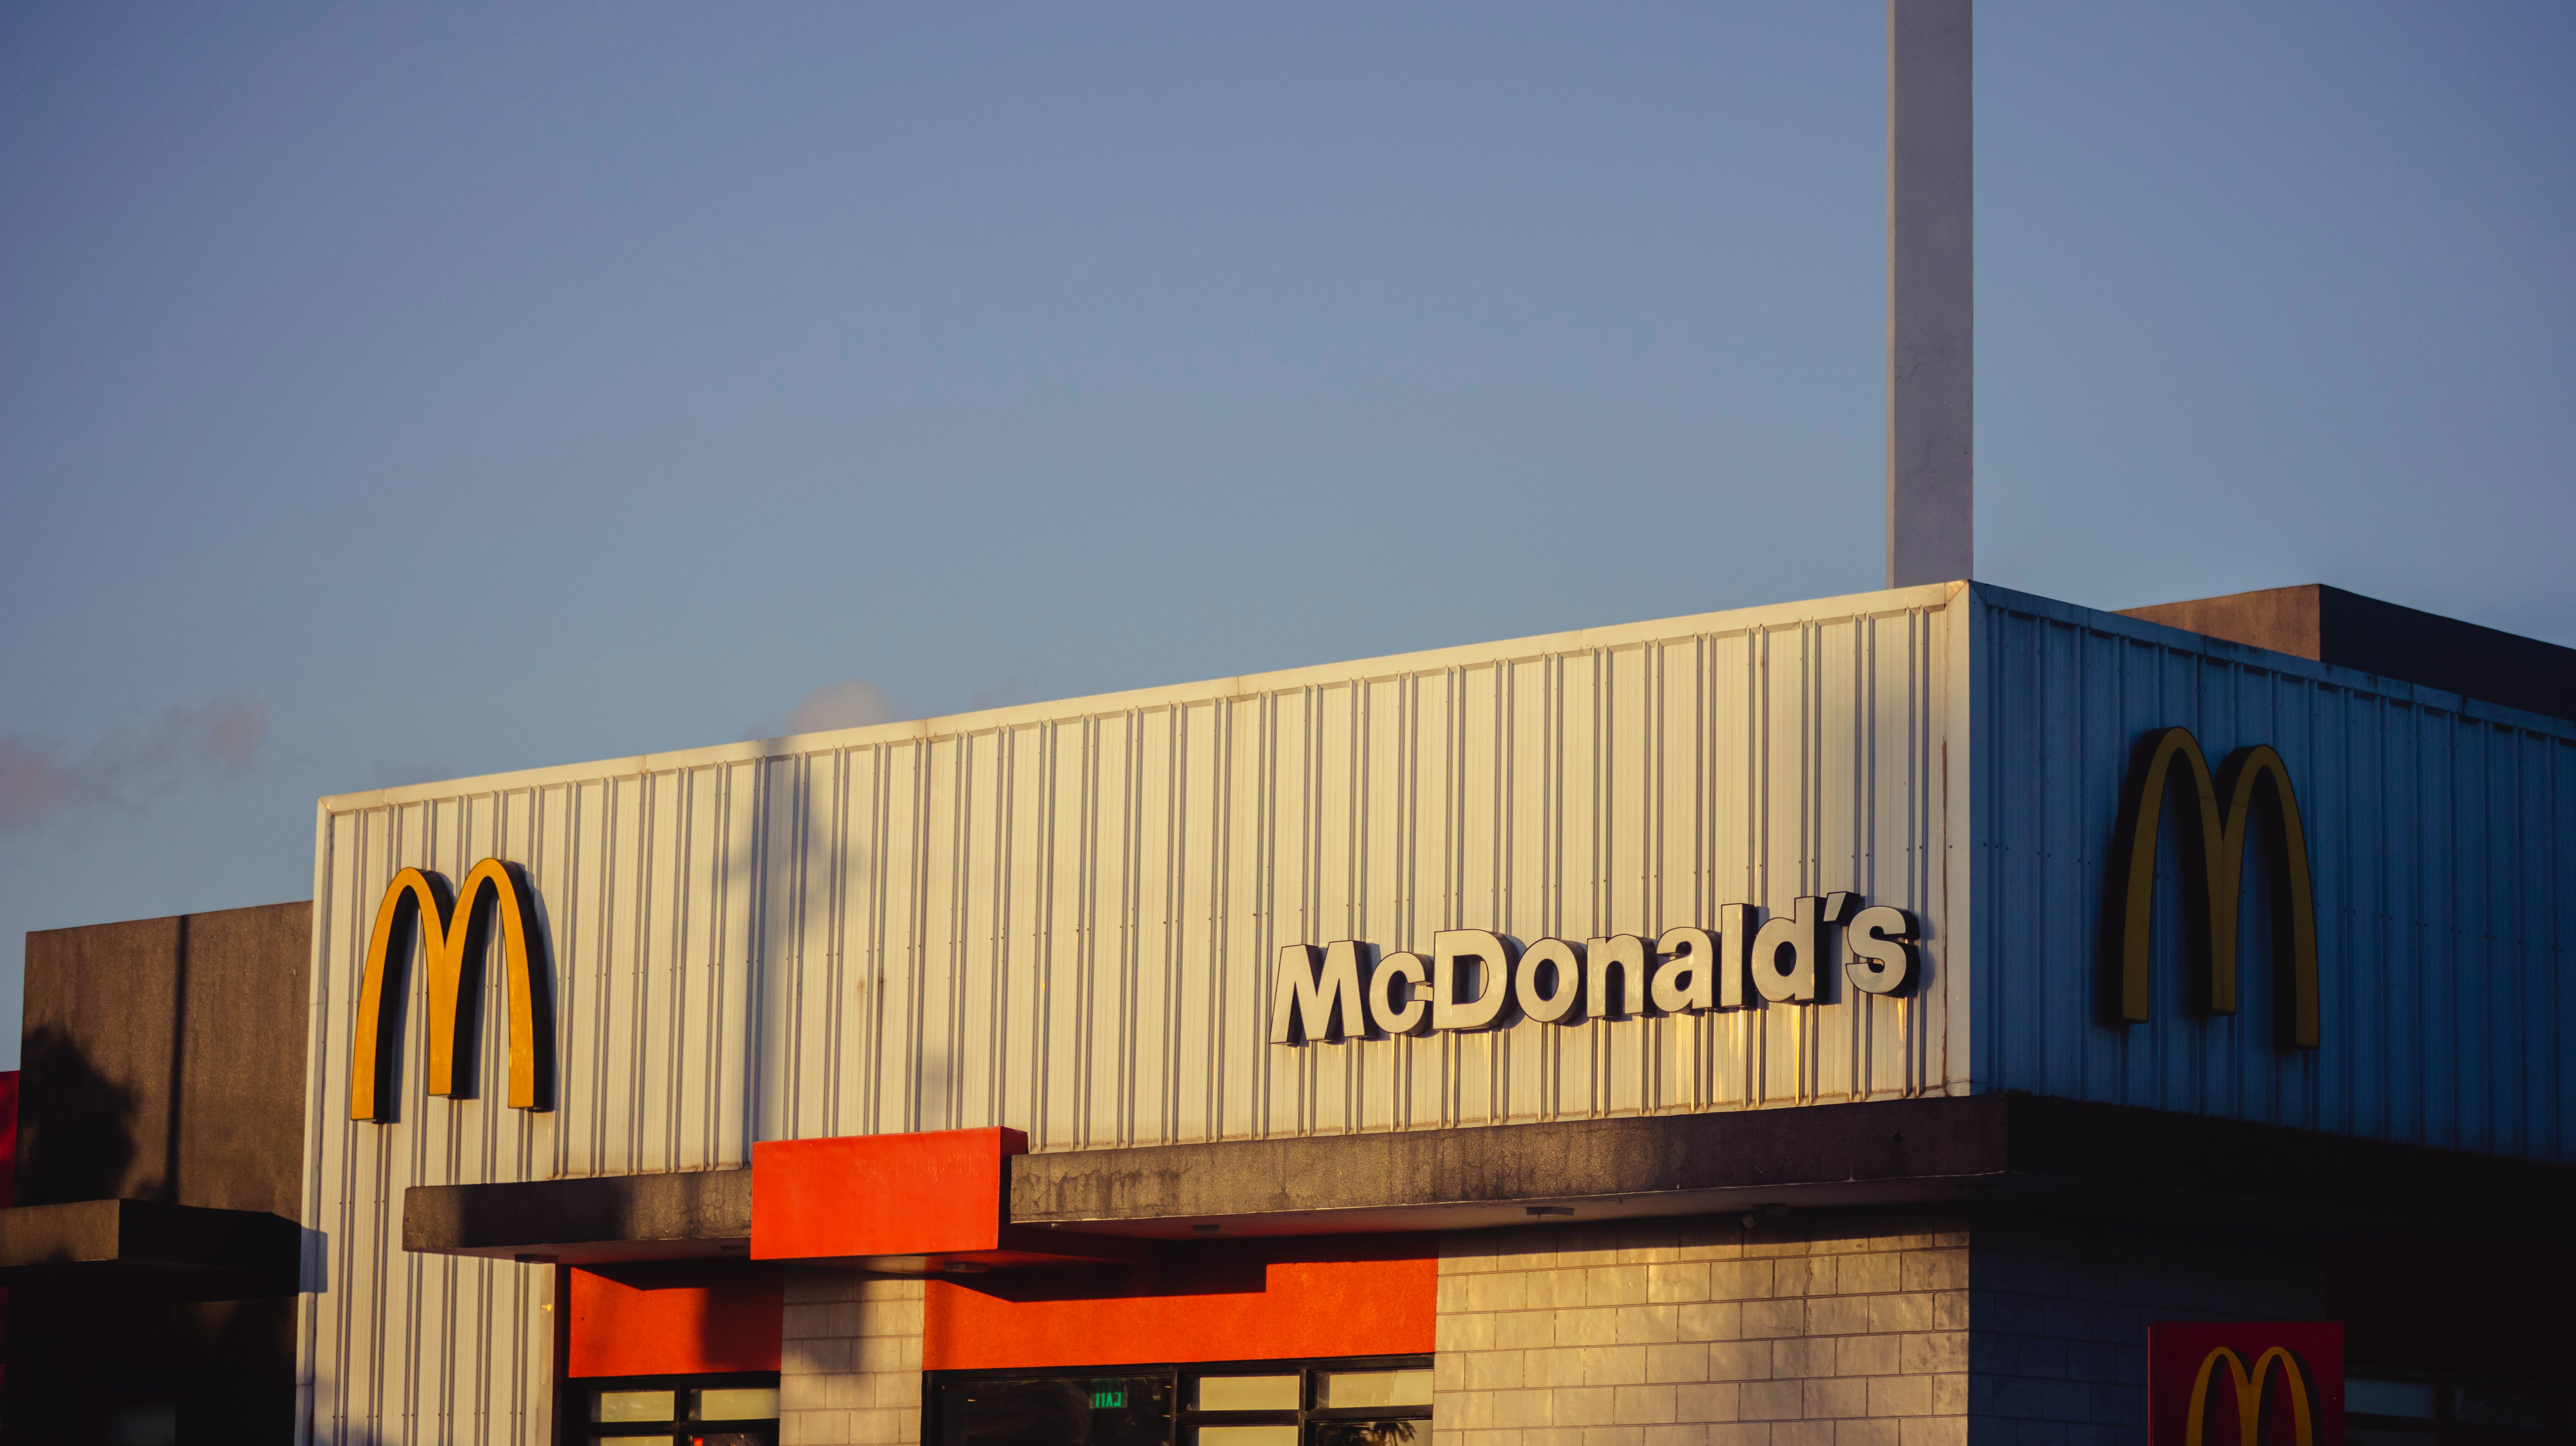 Restaurant McDonald's. | Source : Pexels